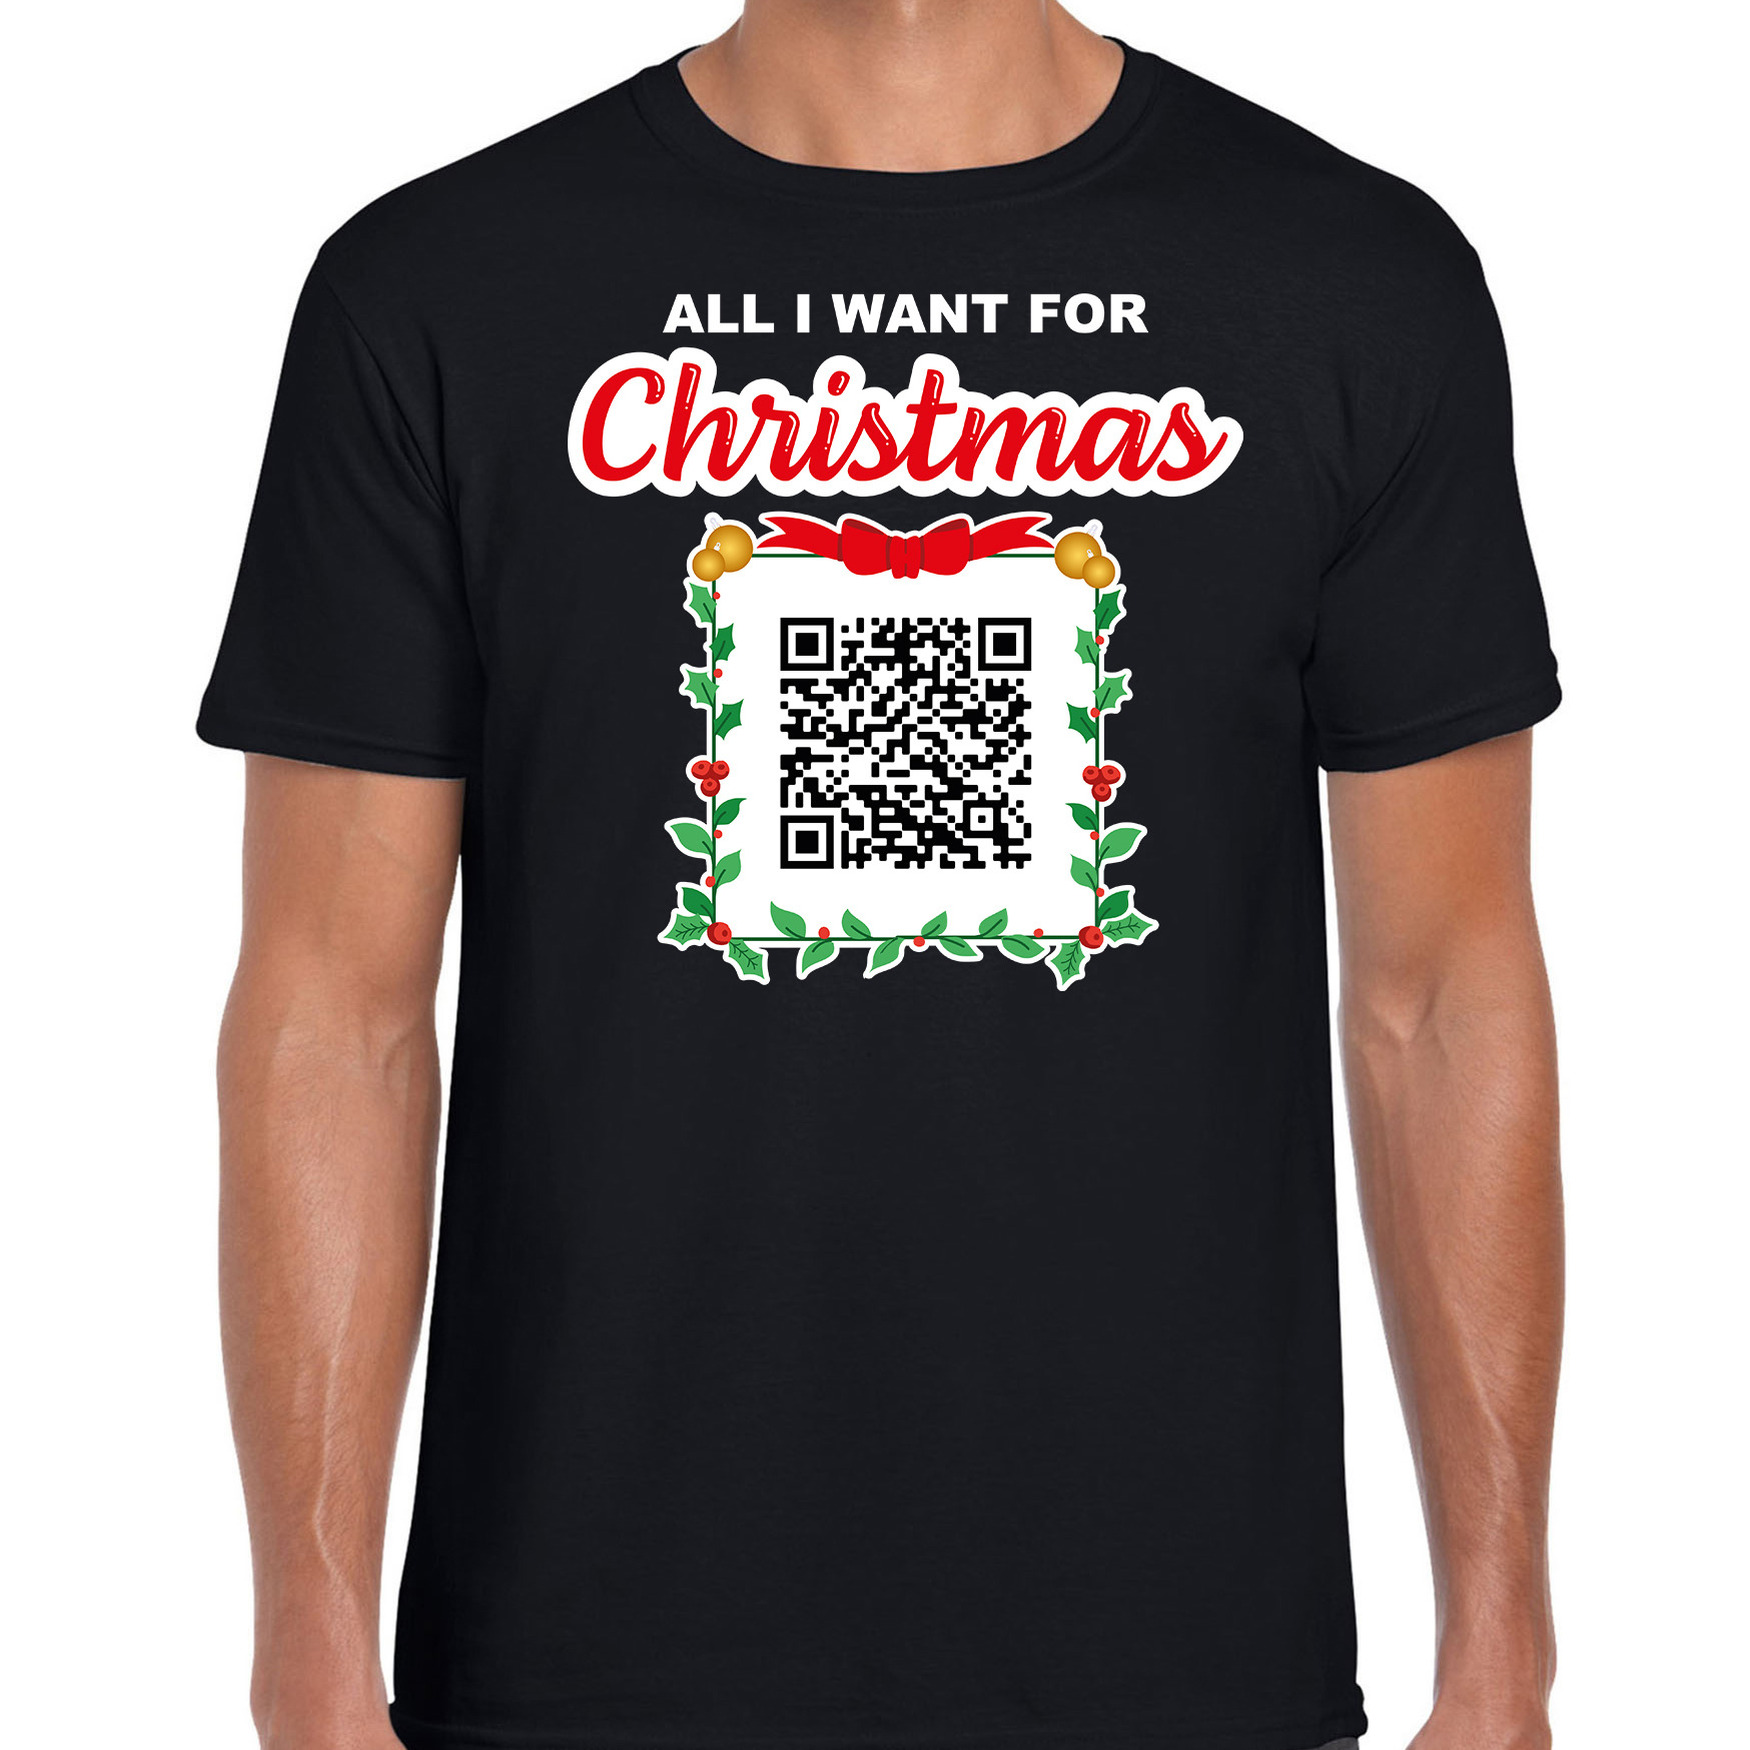 Kerst QR code kerstshirt You naked/ Jij naakt heren zwart - Fout kerst t-shirt